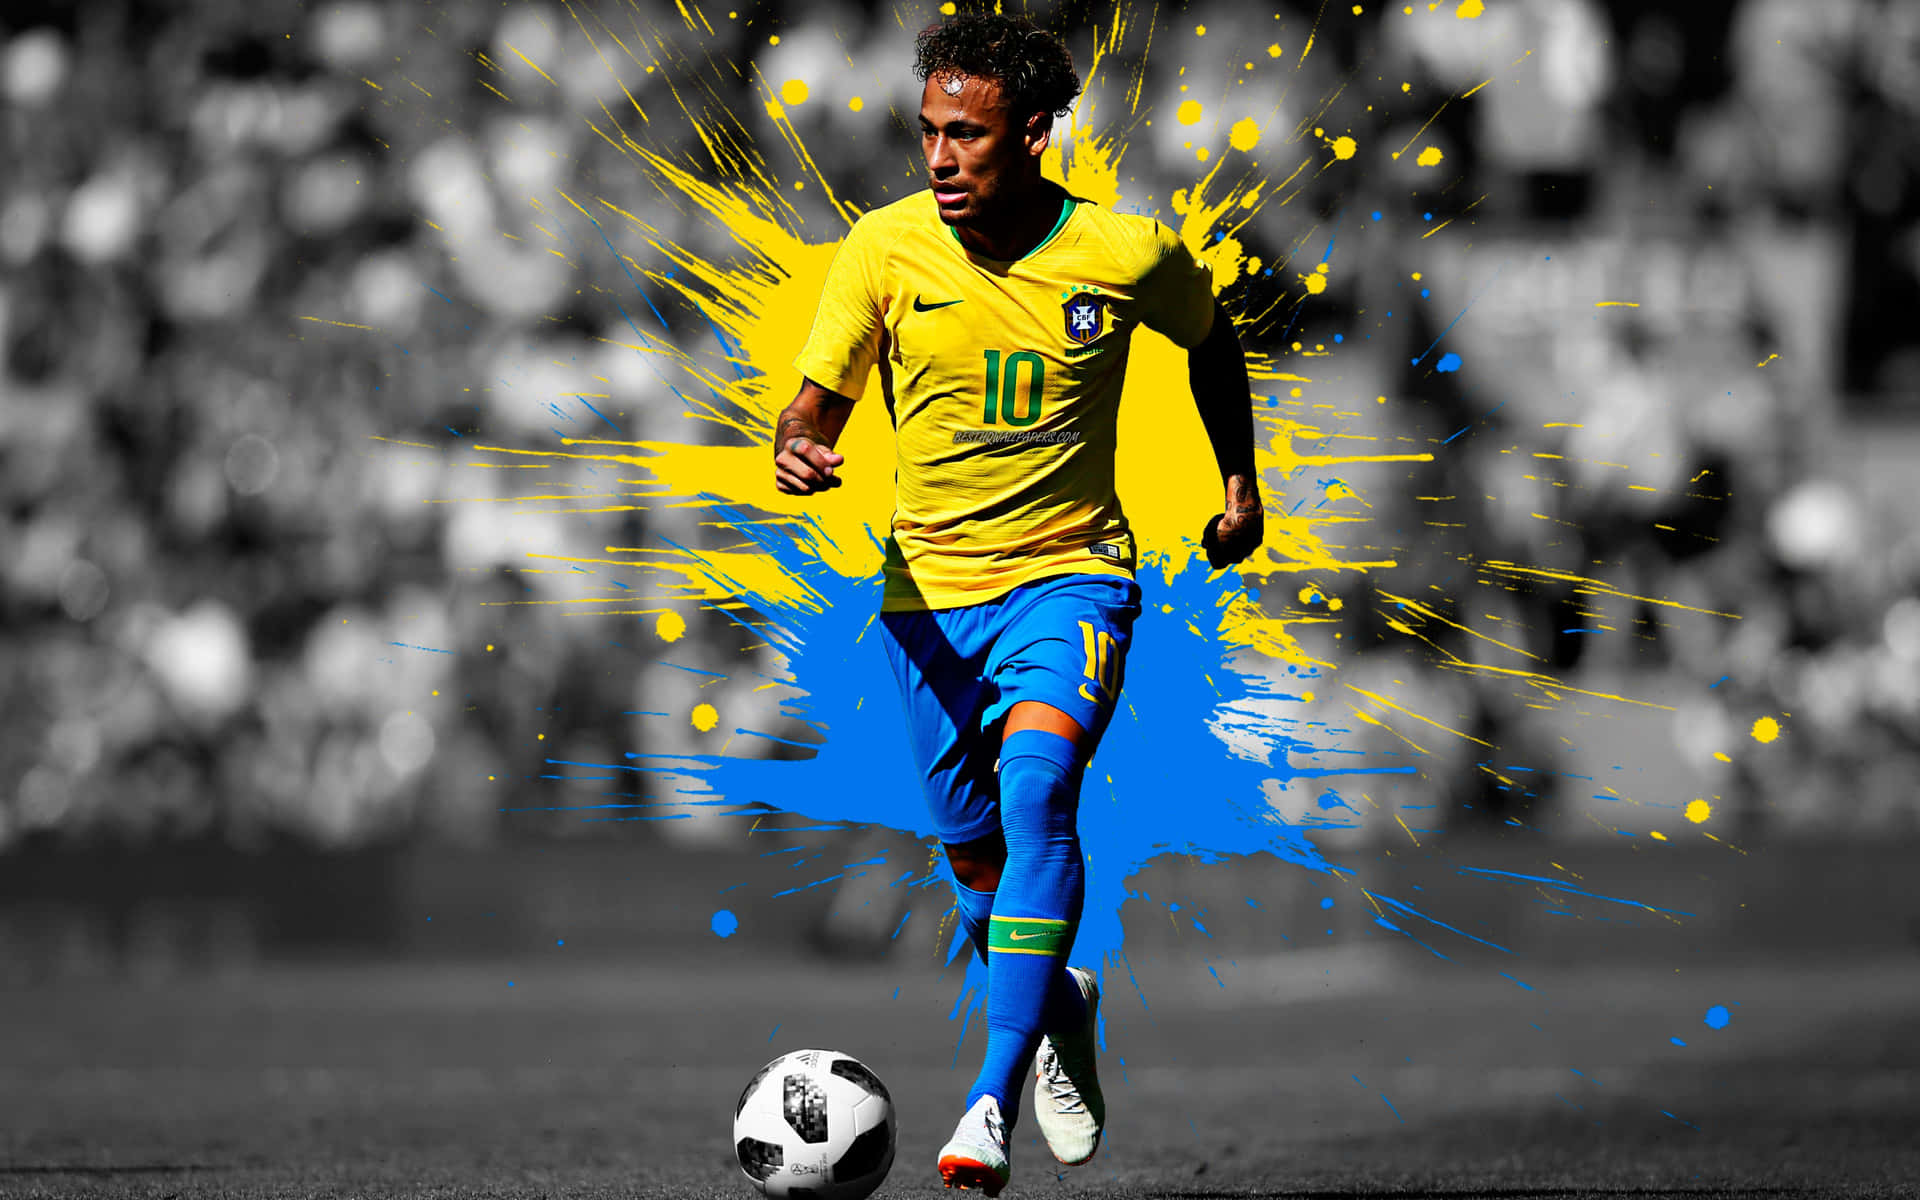 Imagendel Futbolista Neymar